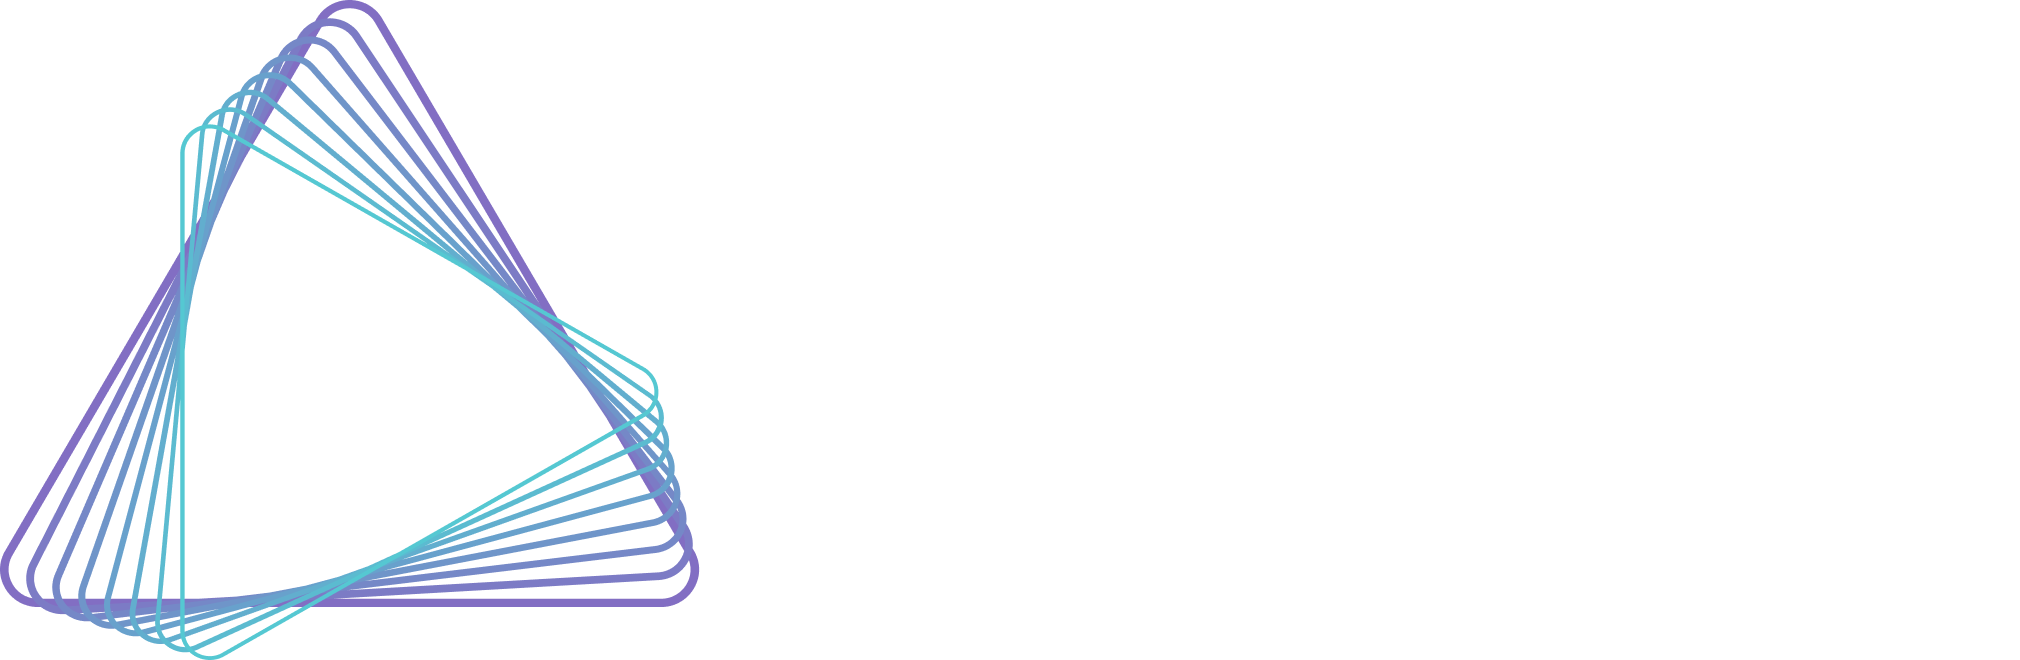 The Azenta Life Sciences logo